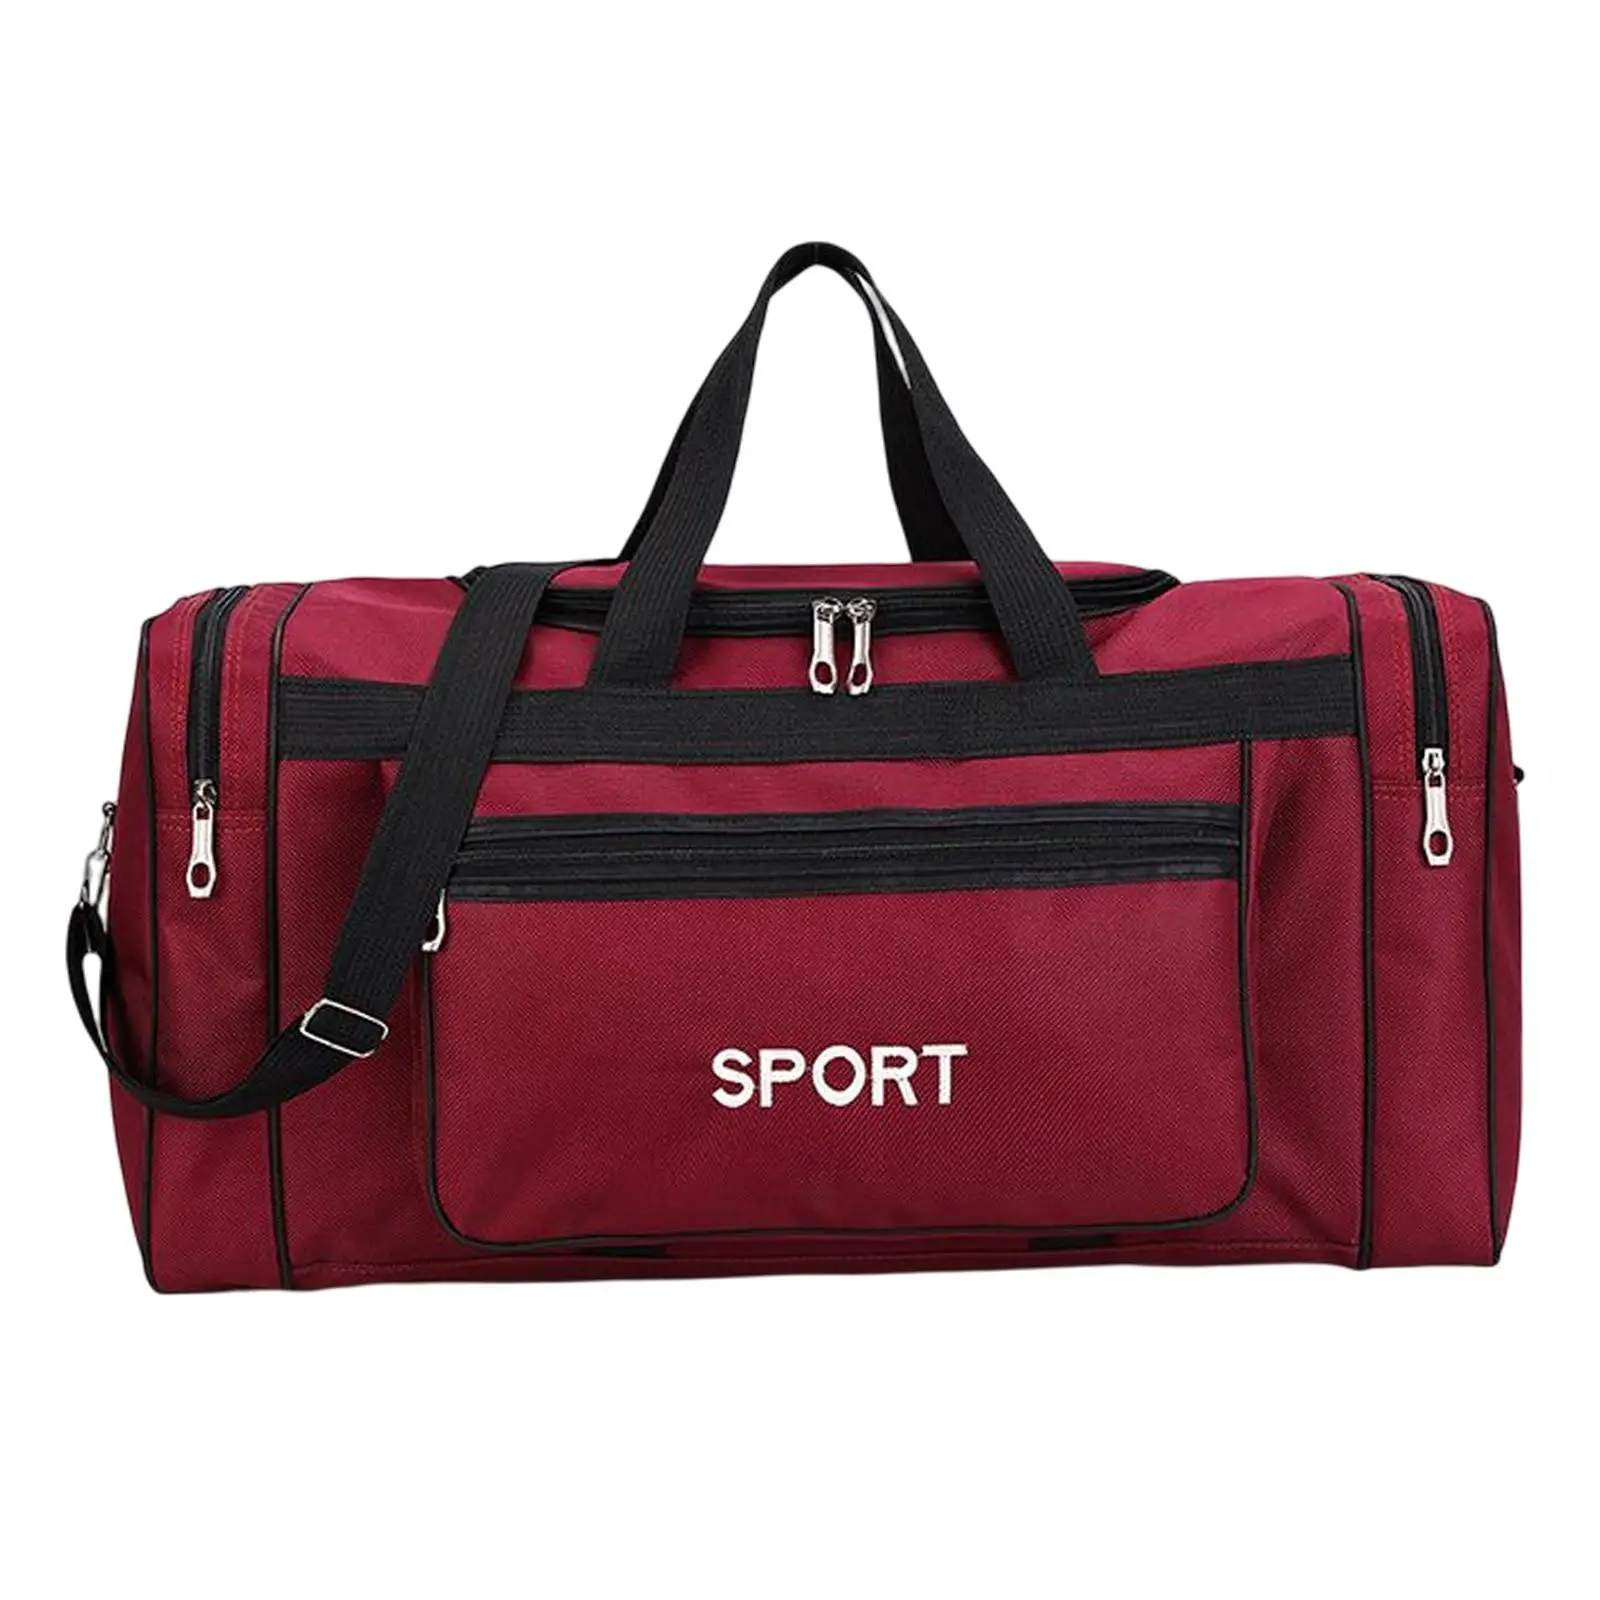 Portable Gym Bag Adjustable Strap Large Lightweight for Camping Workout Yoga